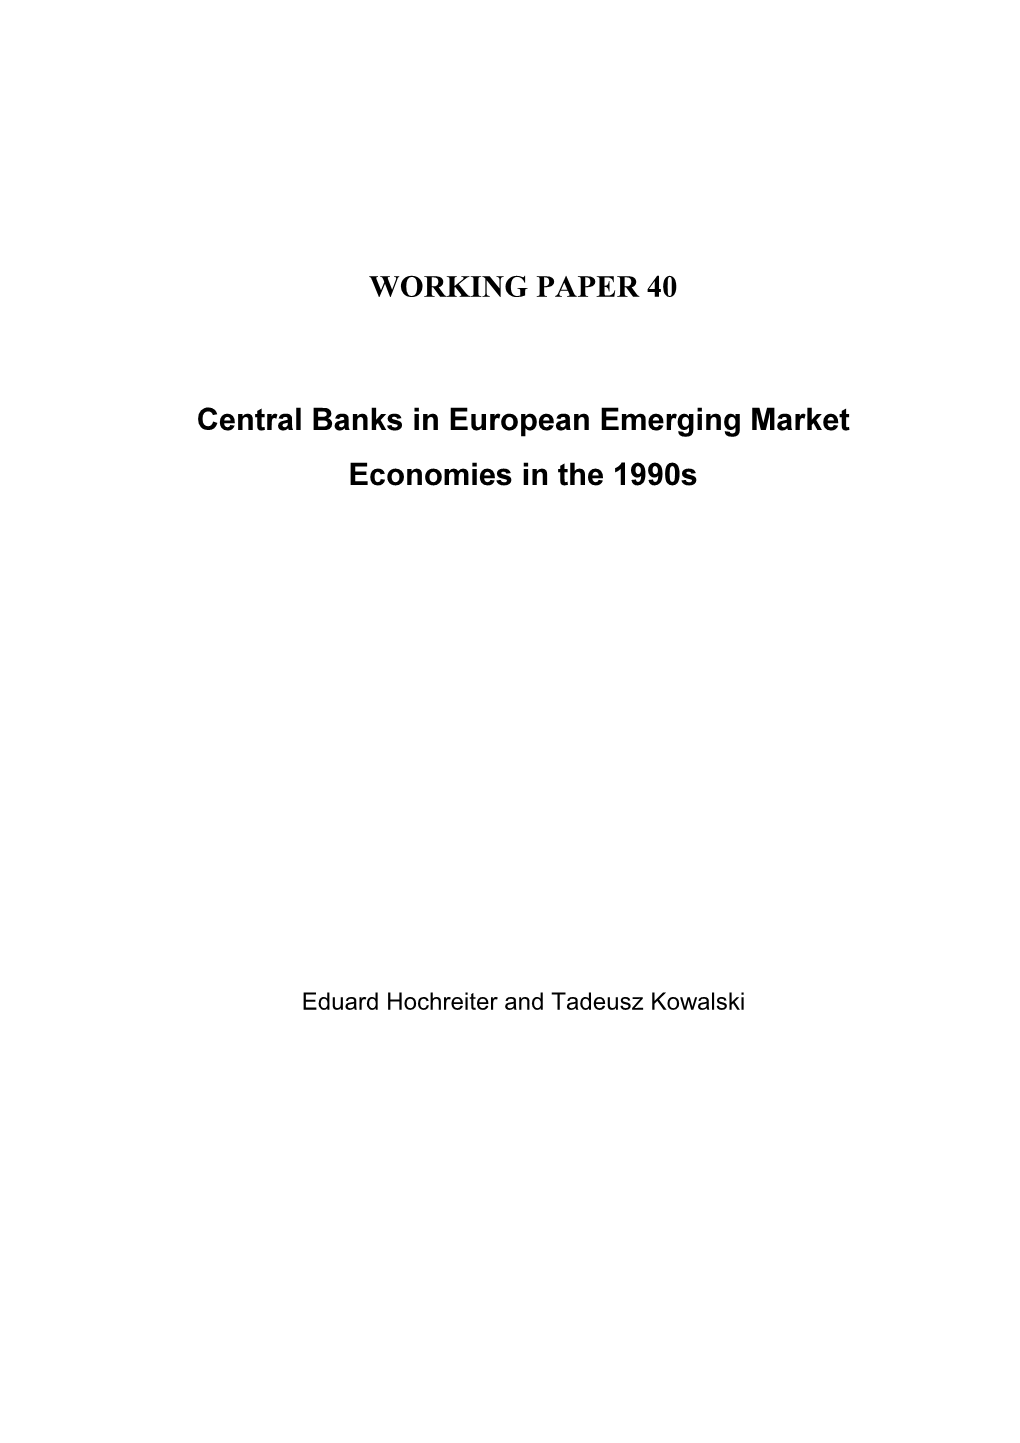 Working Paper 40 – Central Banks in European Emerging Market